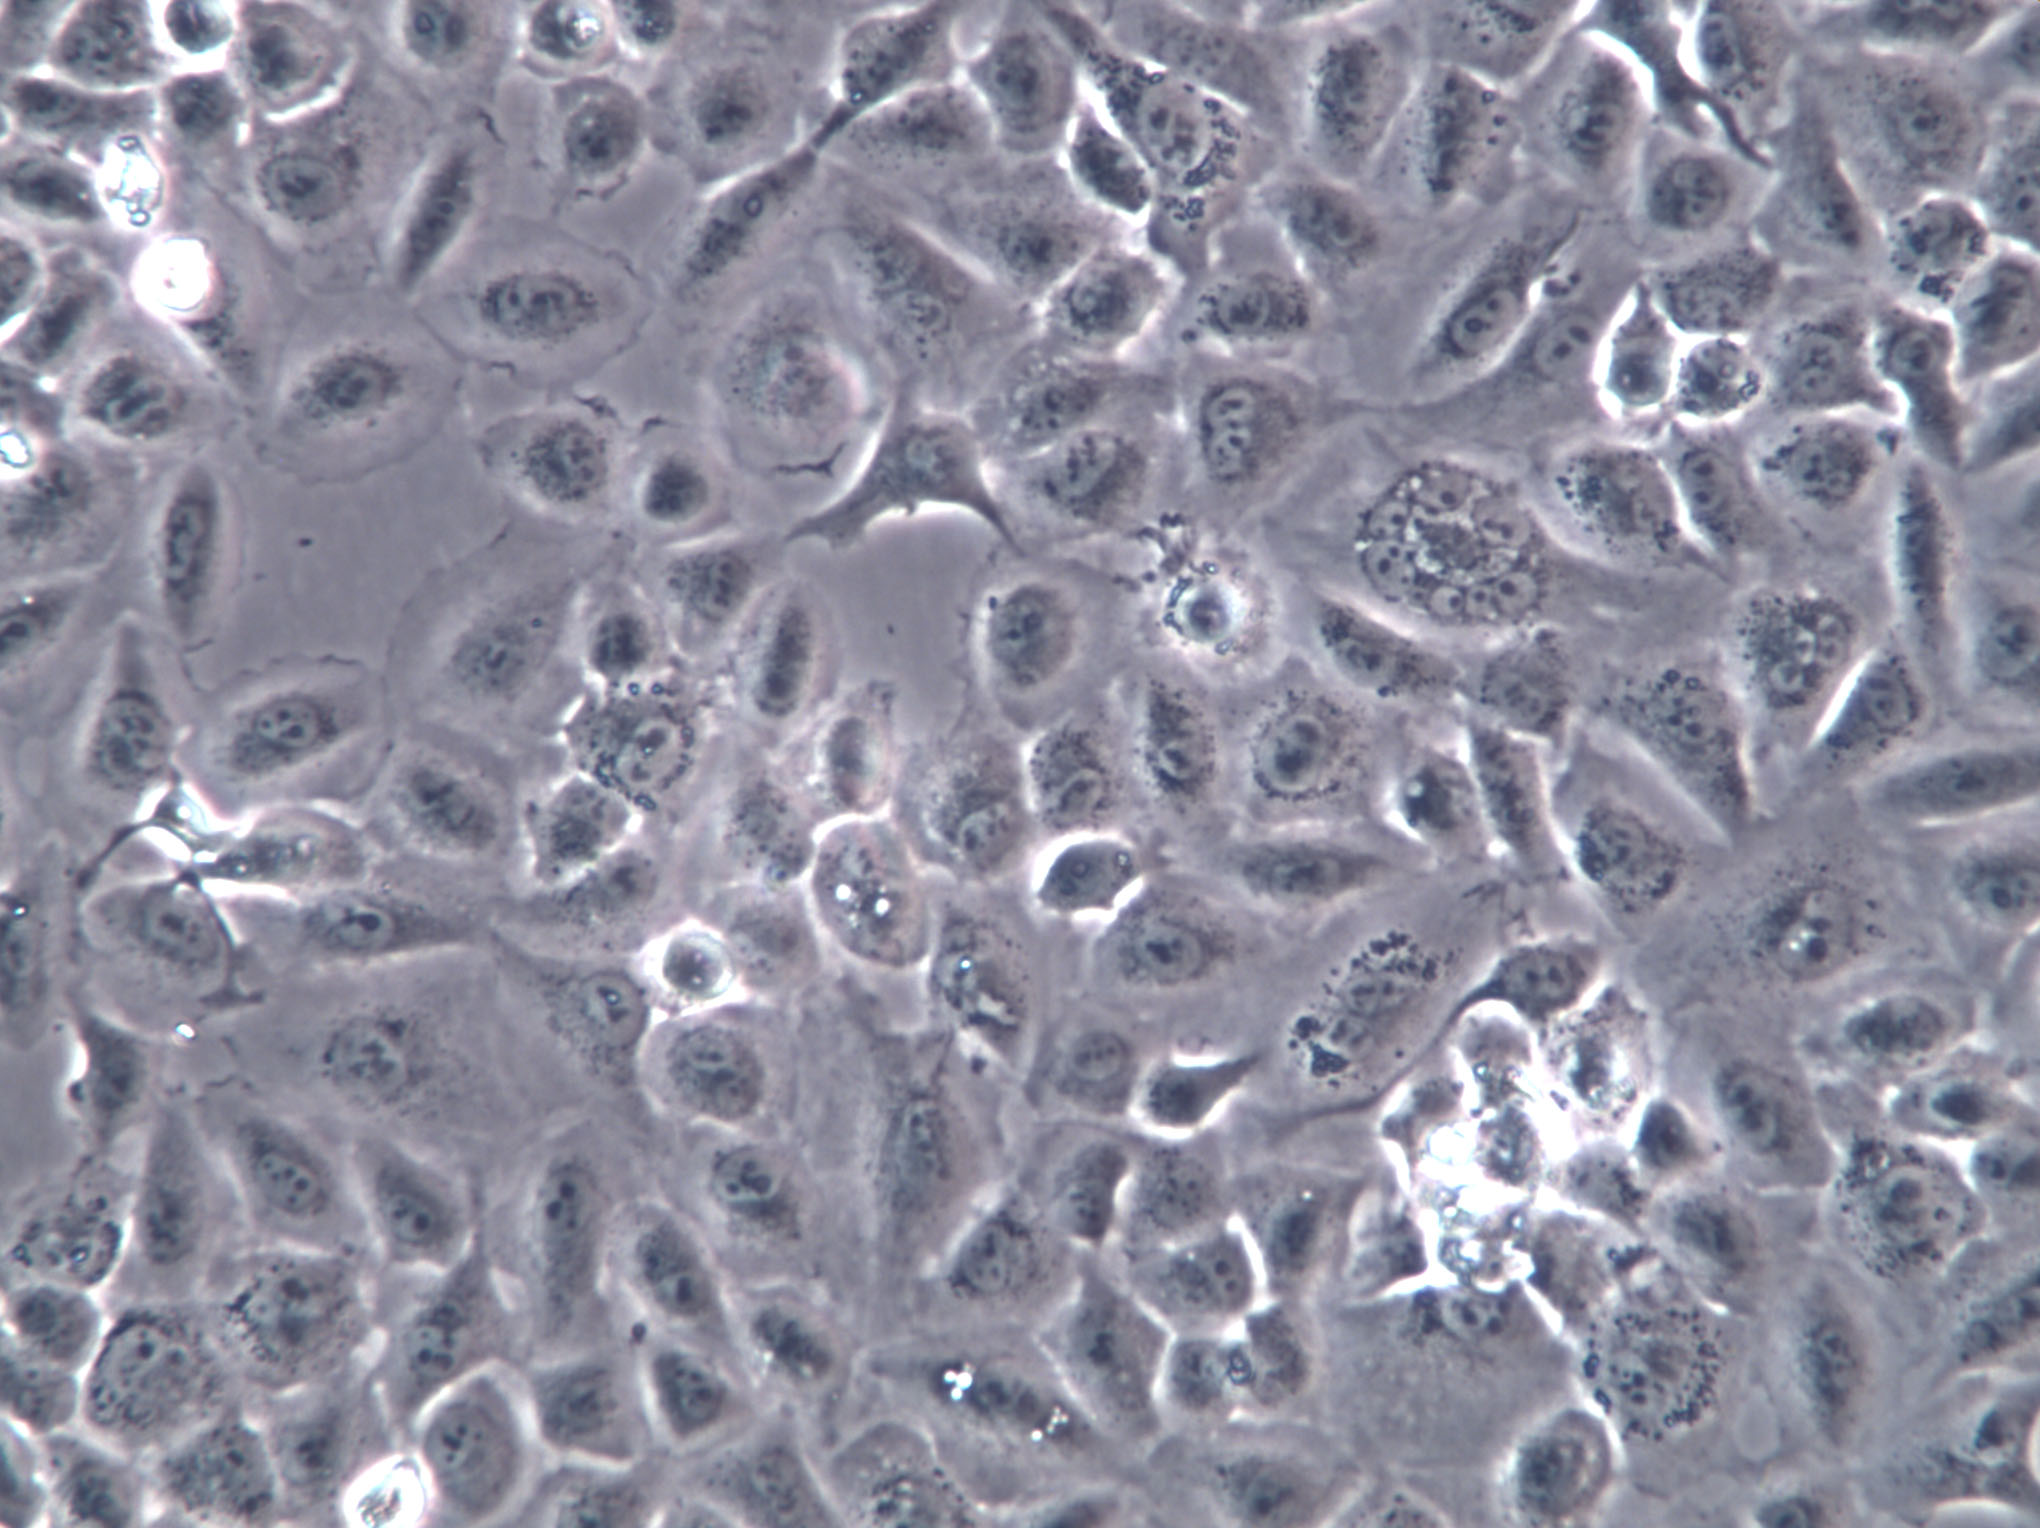 NCI-H510 Cells|人小细胞肺癌克隆细胞(包送STR鉴定报告),NCI-H510 Cells